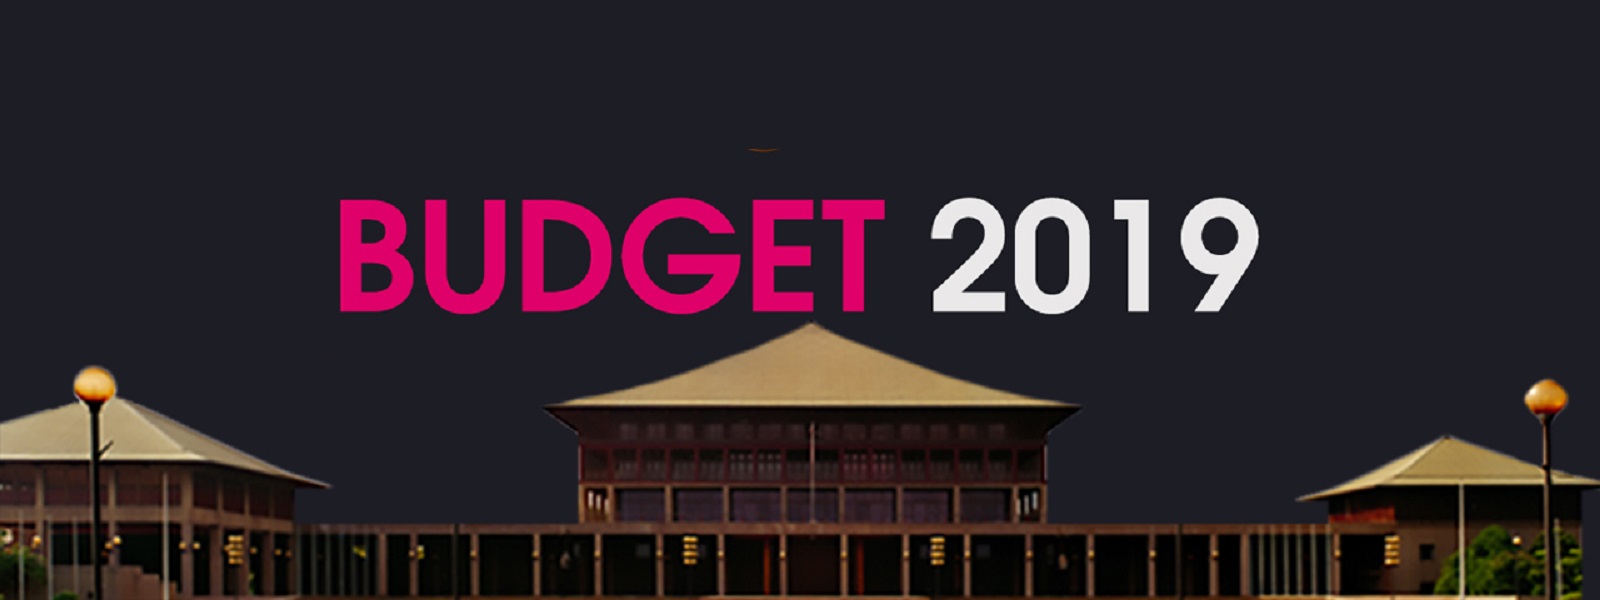 Budget Vote 2019 Today